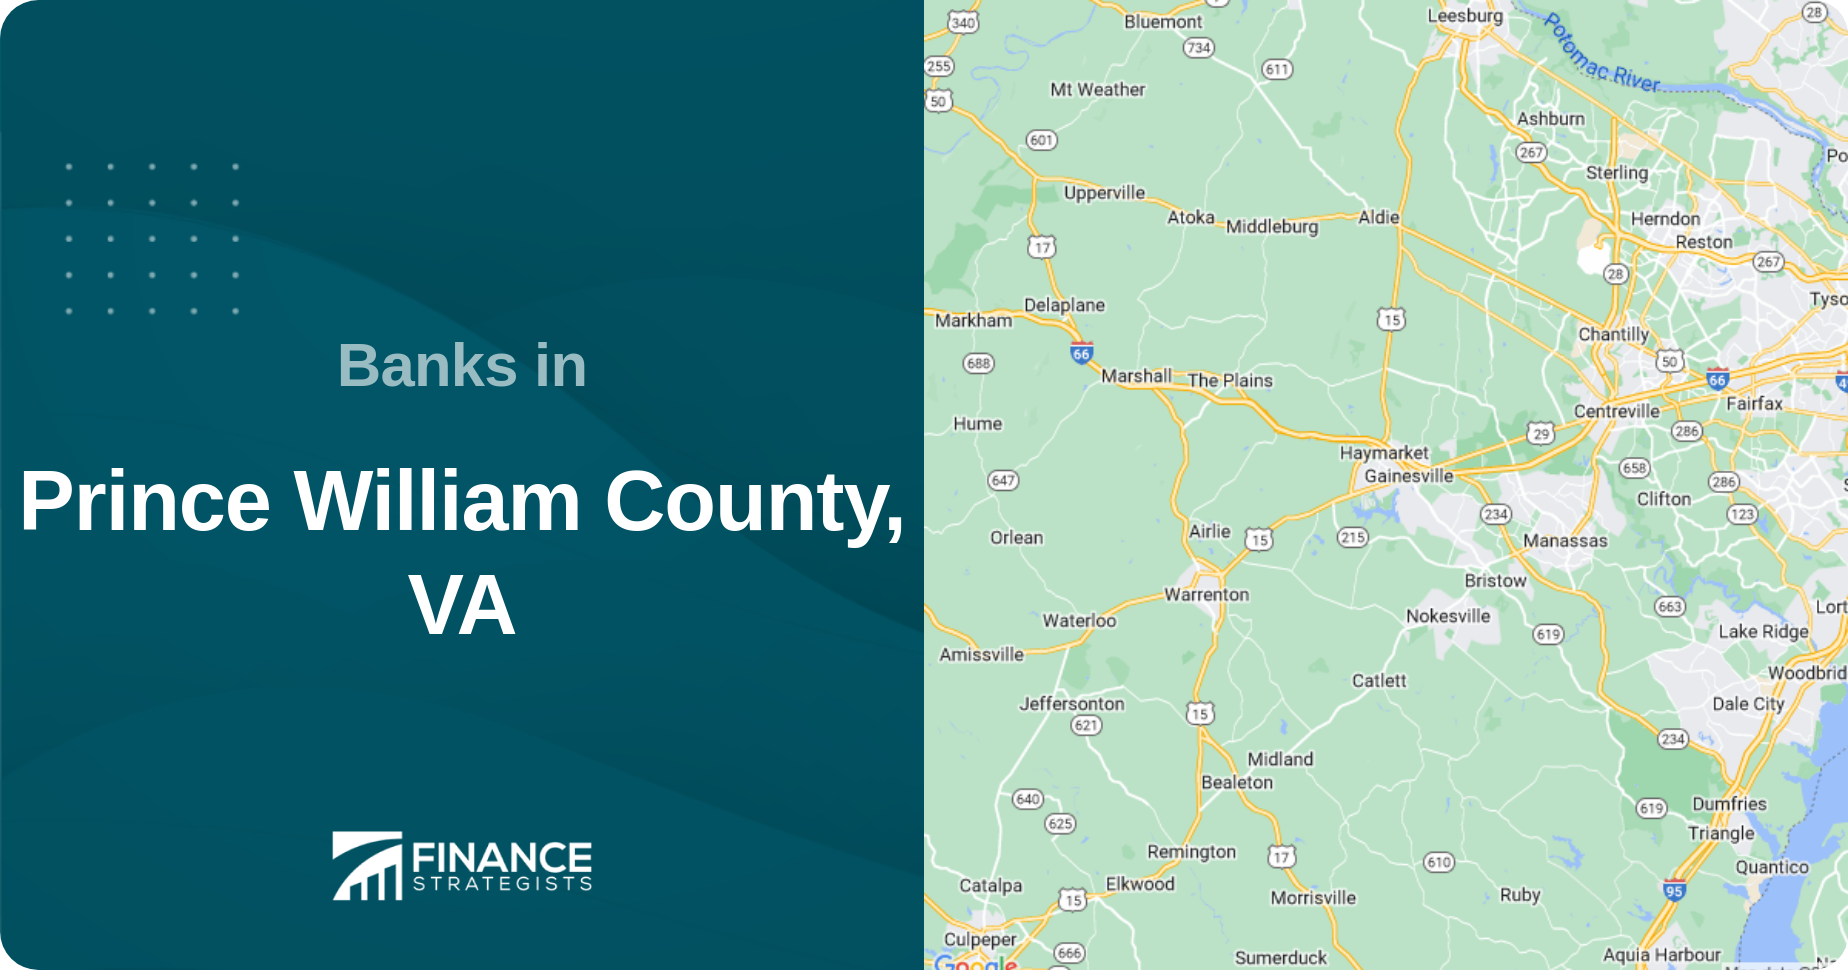 Banks in Prince William County, VA